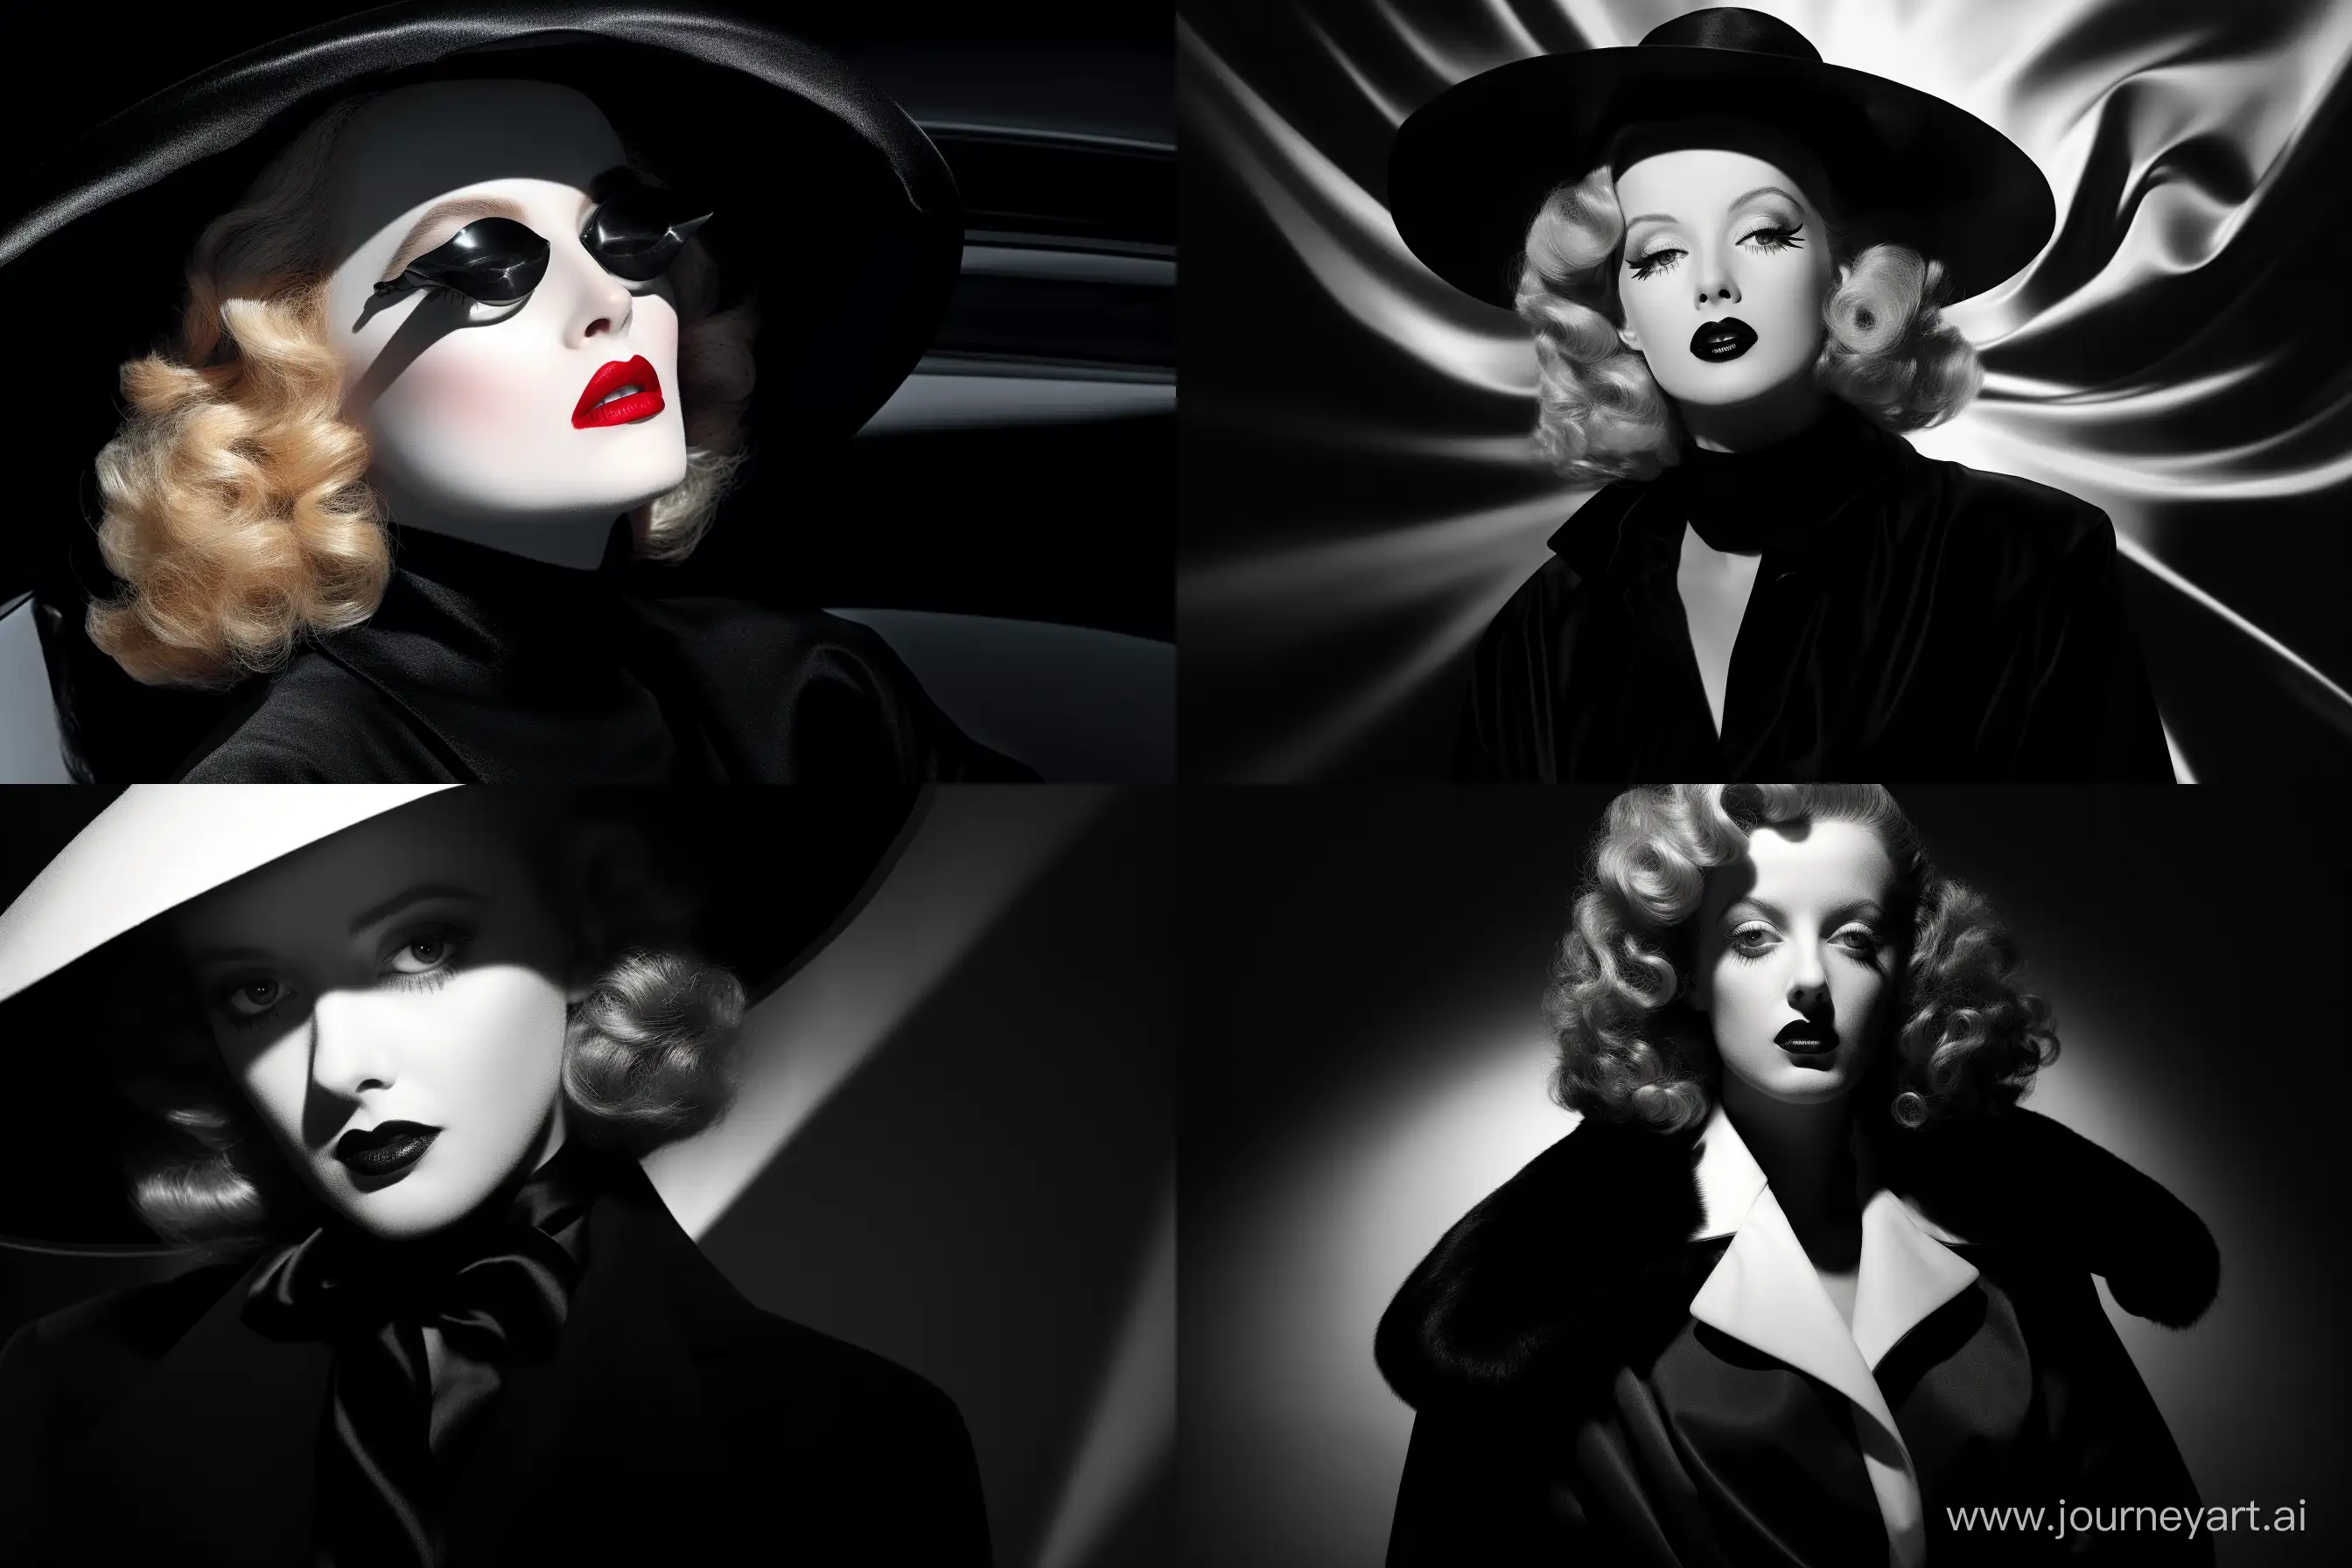 Film Noir Femme: Bette Davis, Capture the essence of film noir with a mysterious and glamorous fashion portrait. --ar 3:2